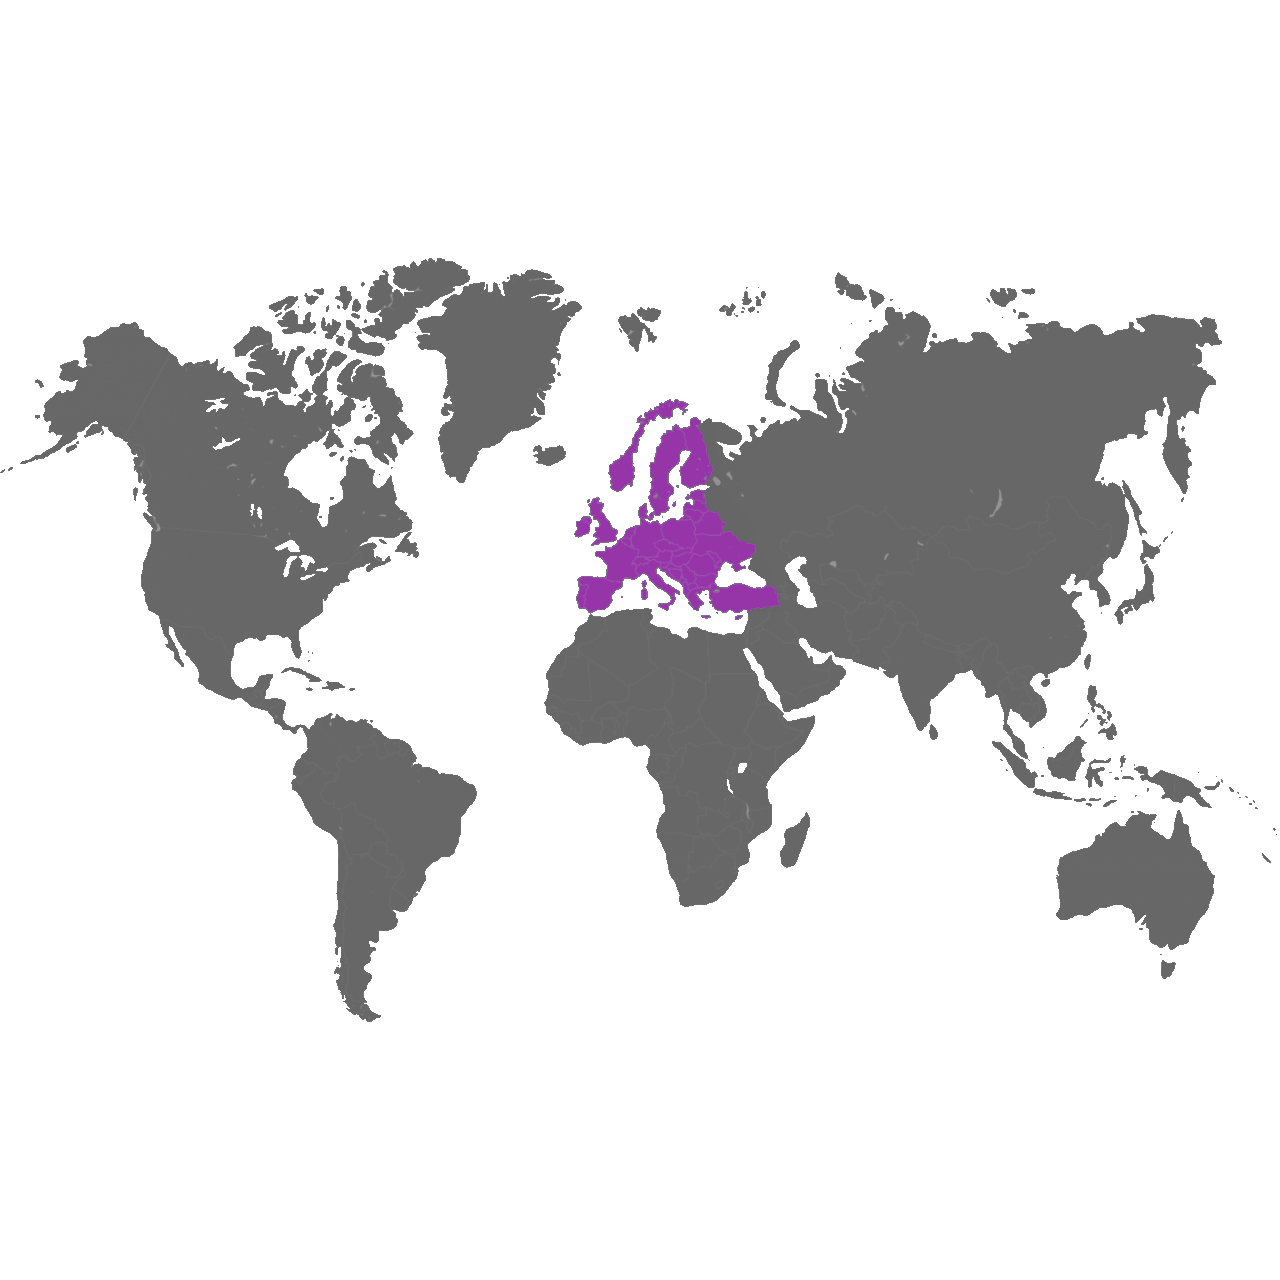 Europe-Uk regions - Licence Holders - i4T Global